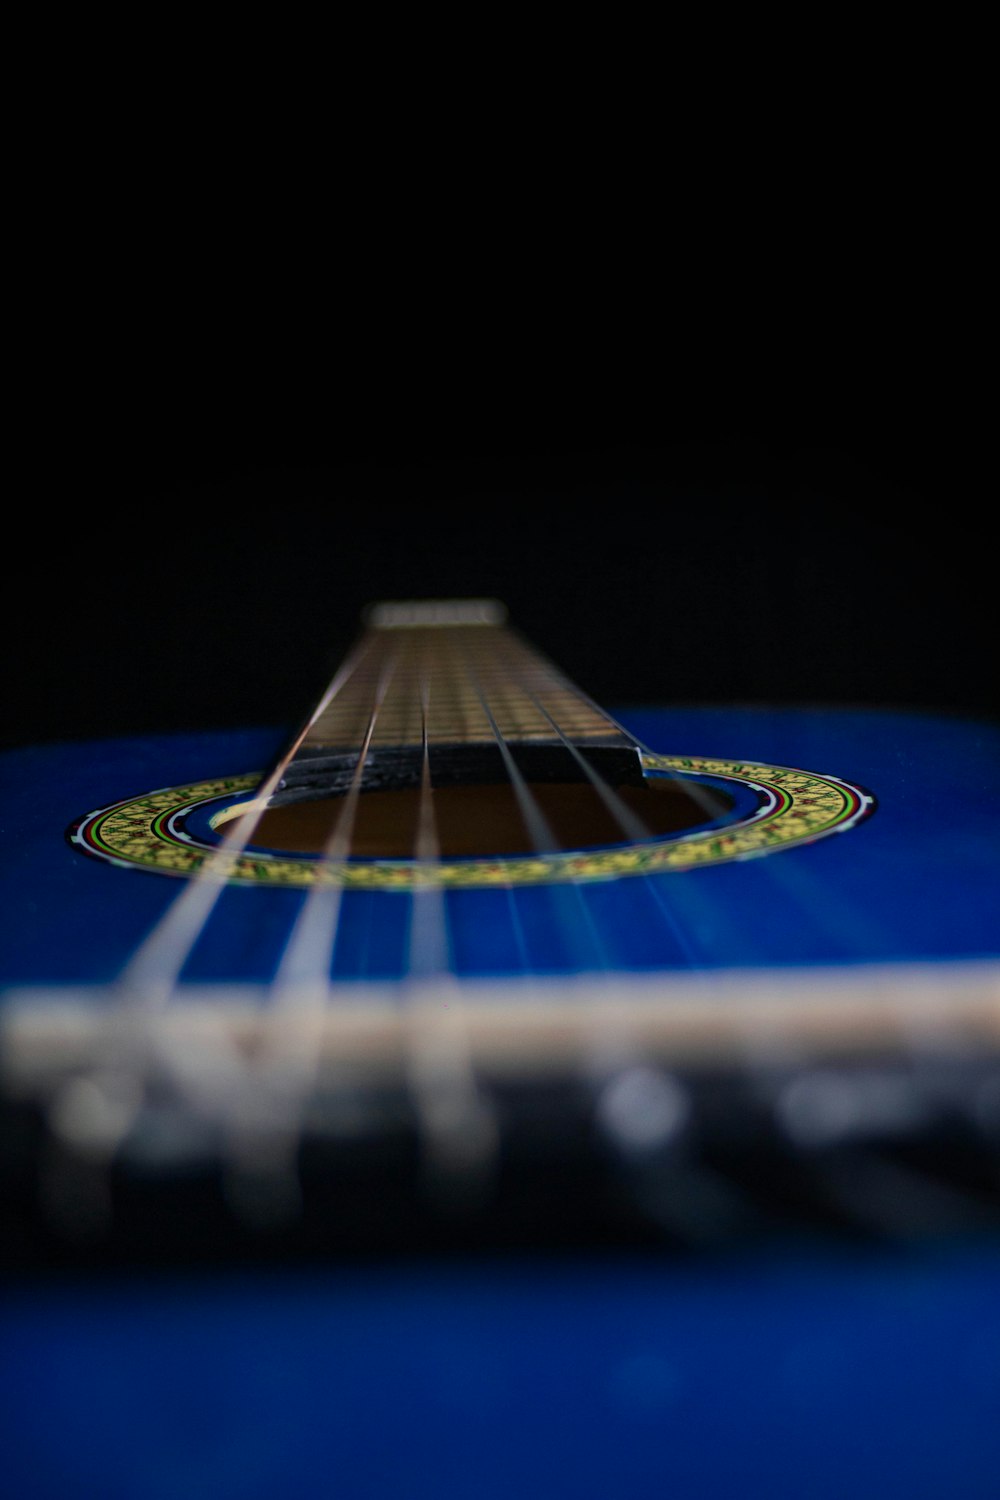 a close up of a blue acoustic guitar